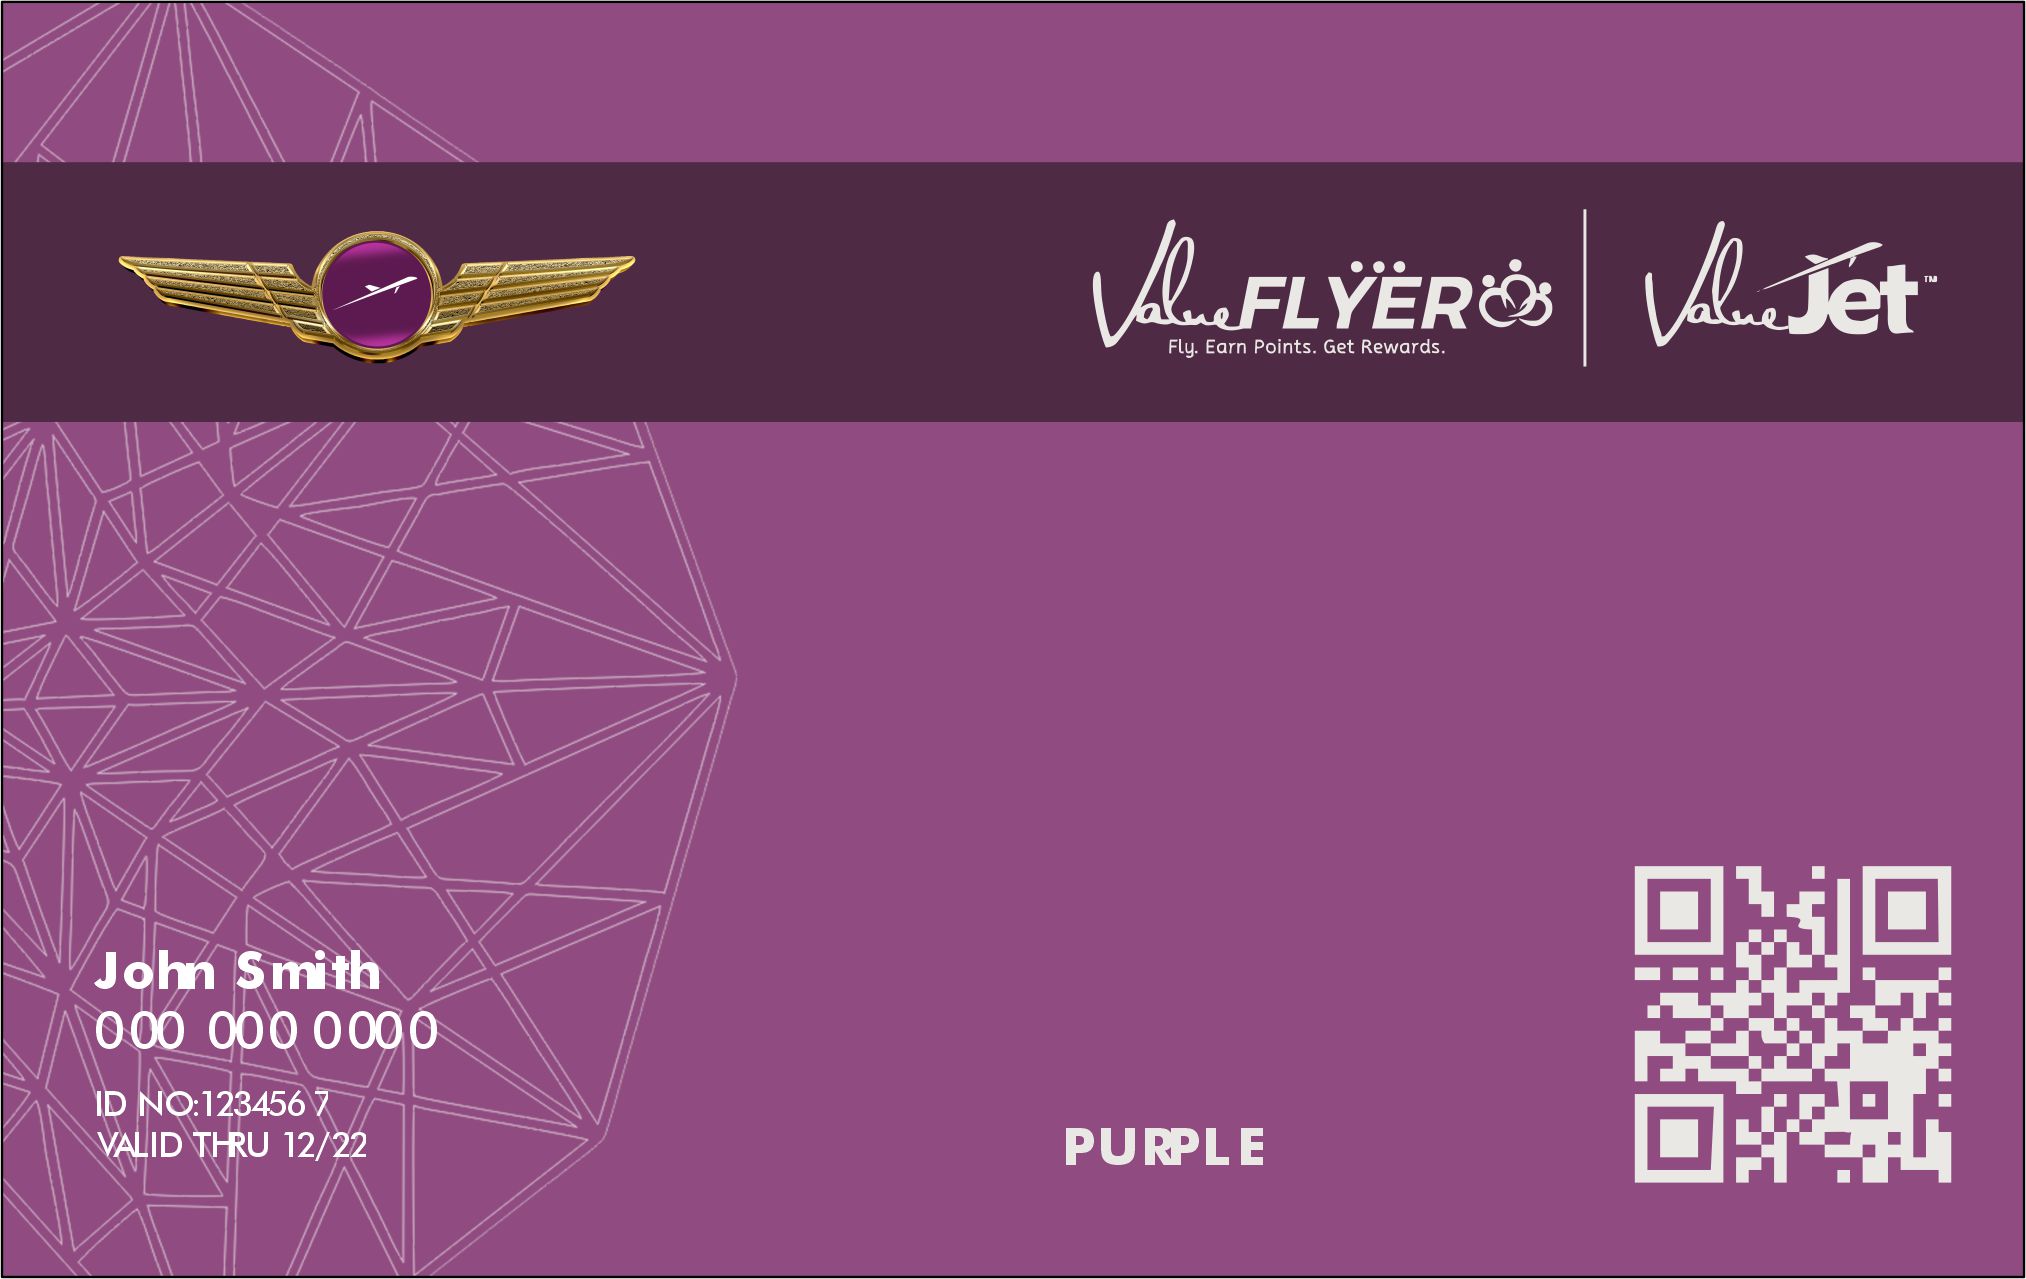 value flyer purple card